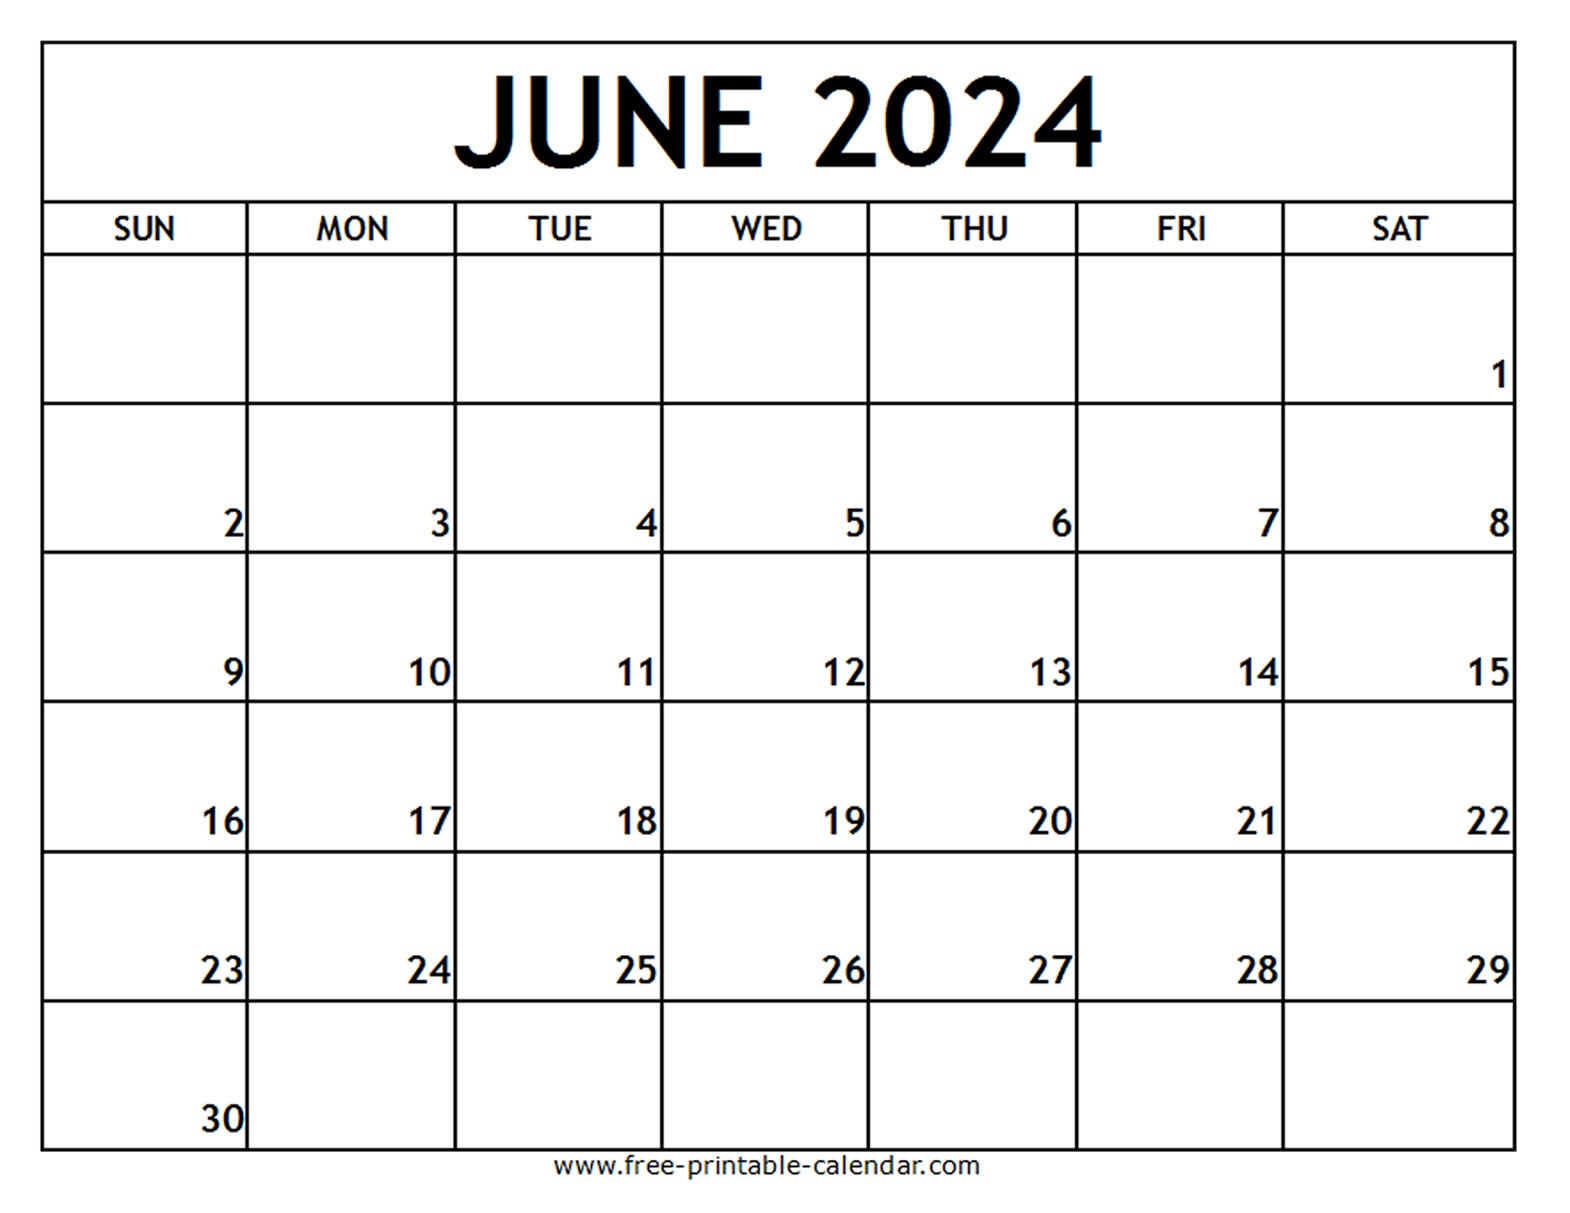 June 2024 Printable Calendar - Free-Printable-Calendar within Free Printable Calendar 2024 June Word